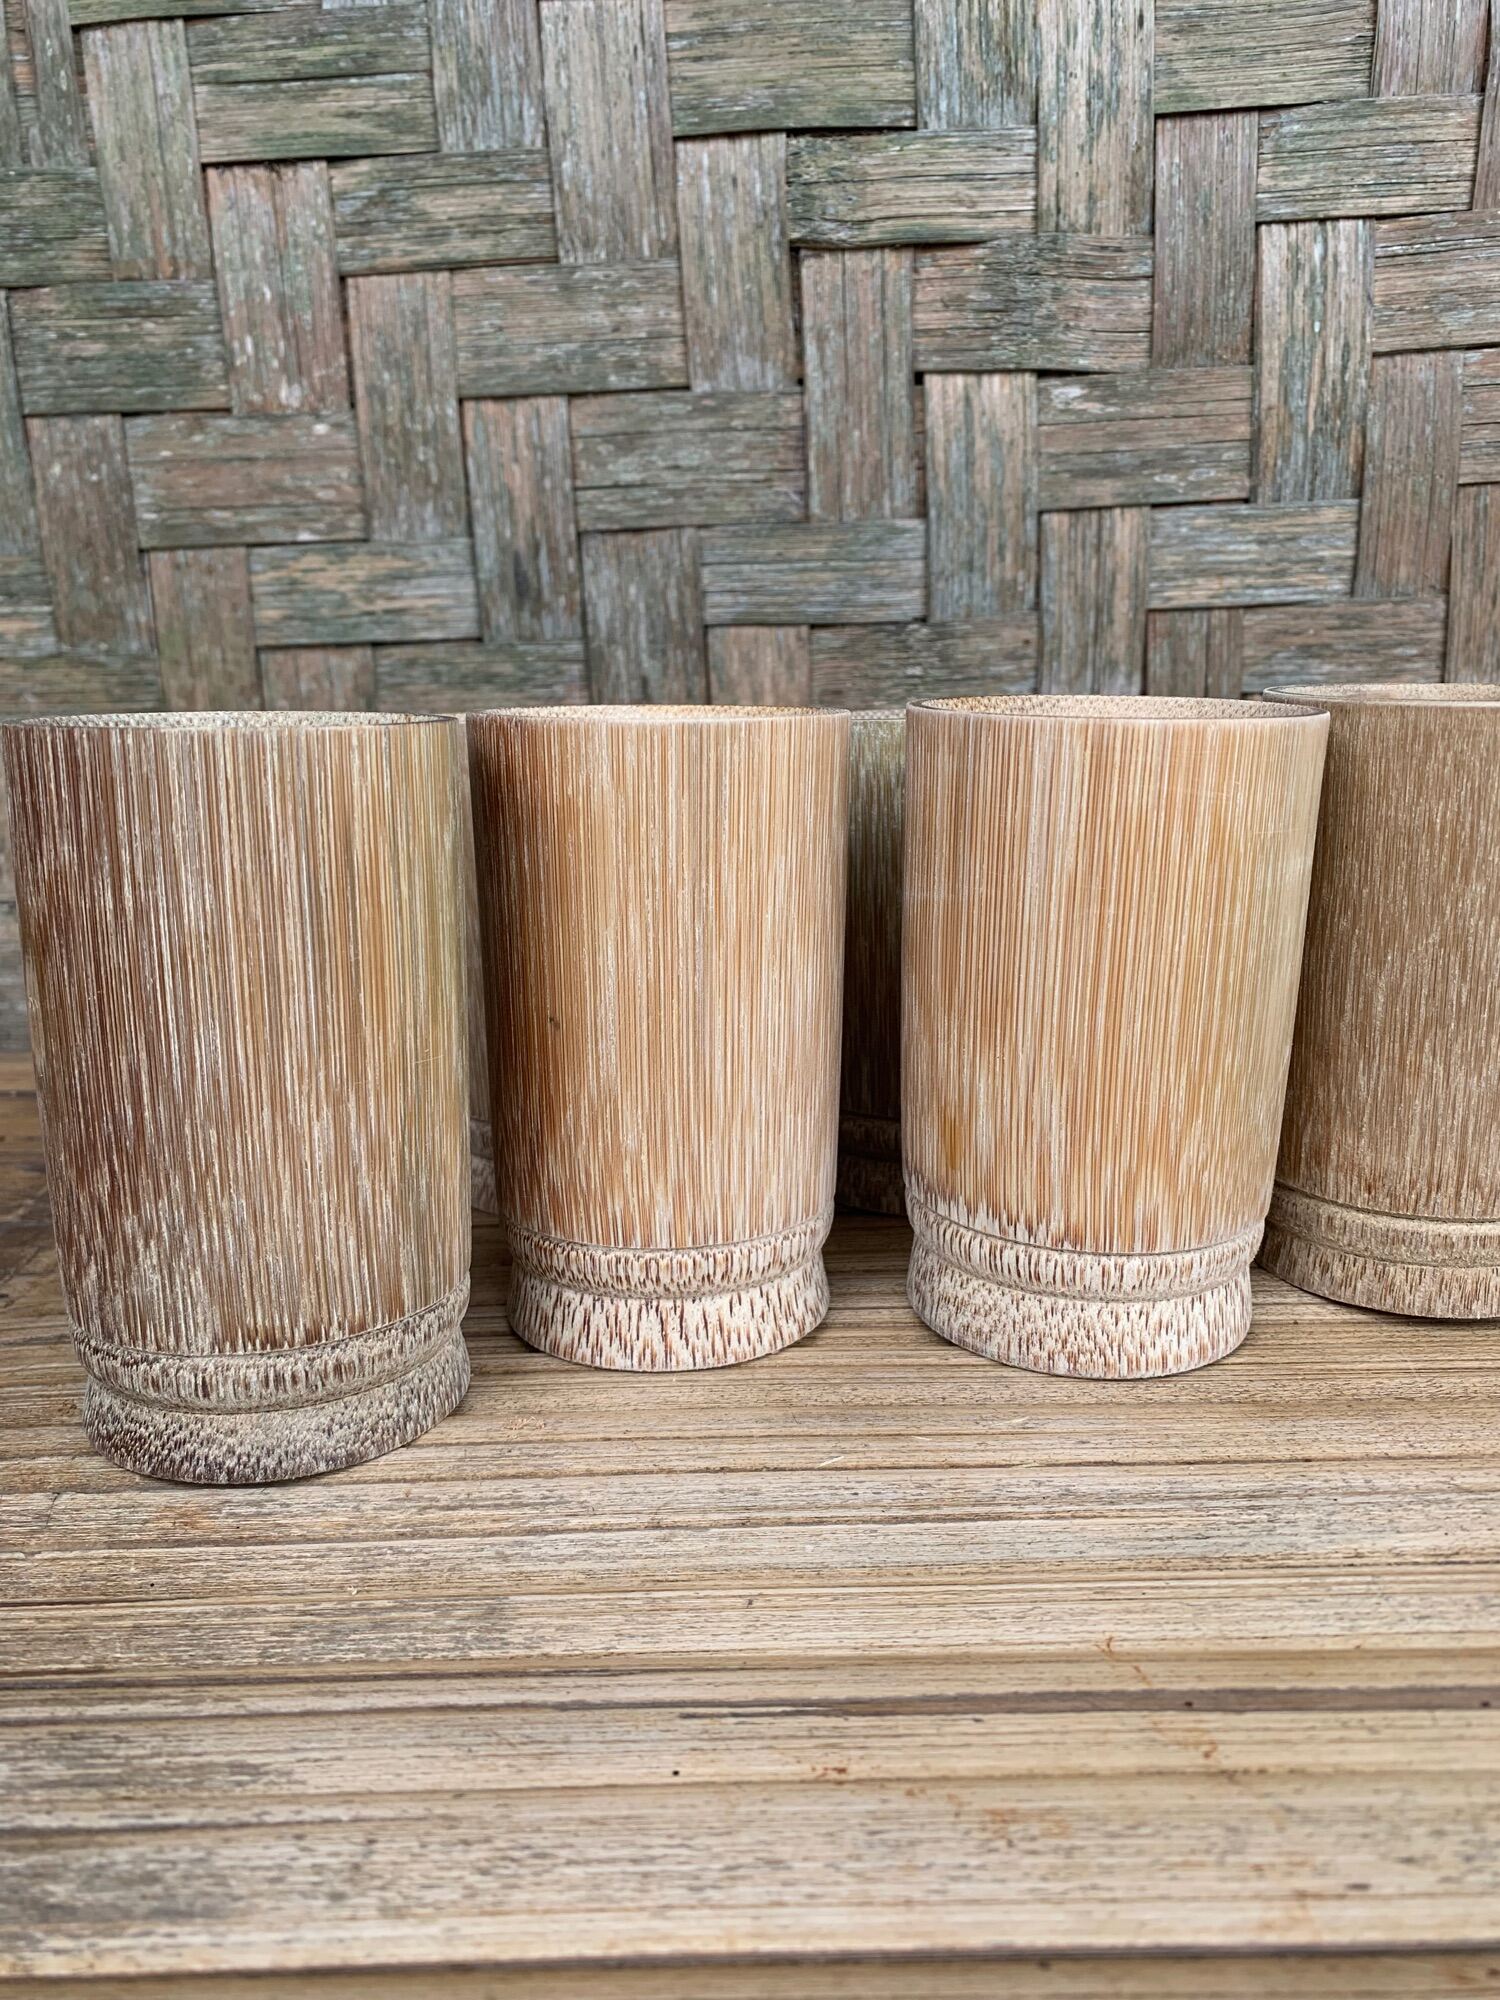 Gelas Bambu Tradisional Lazada Indonesia 3649